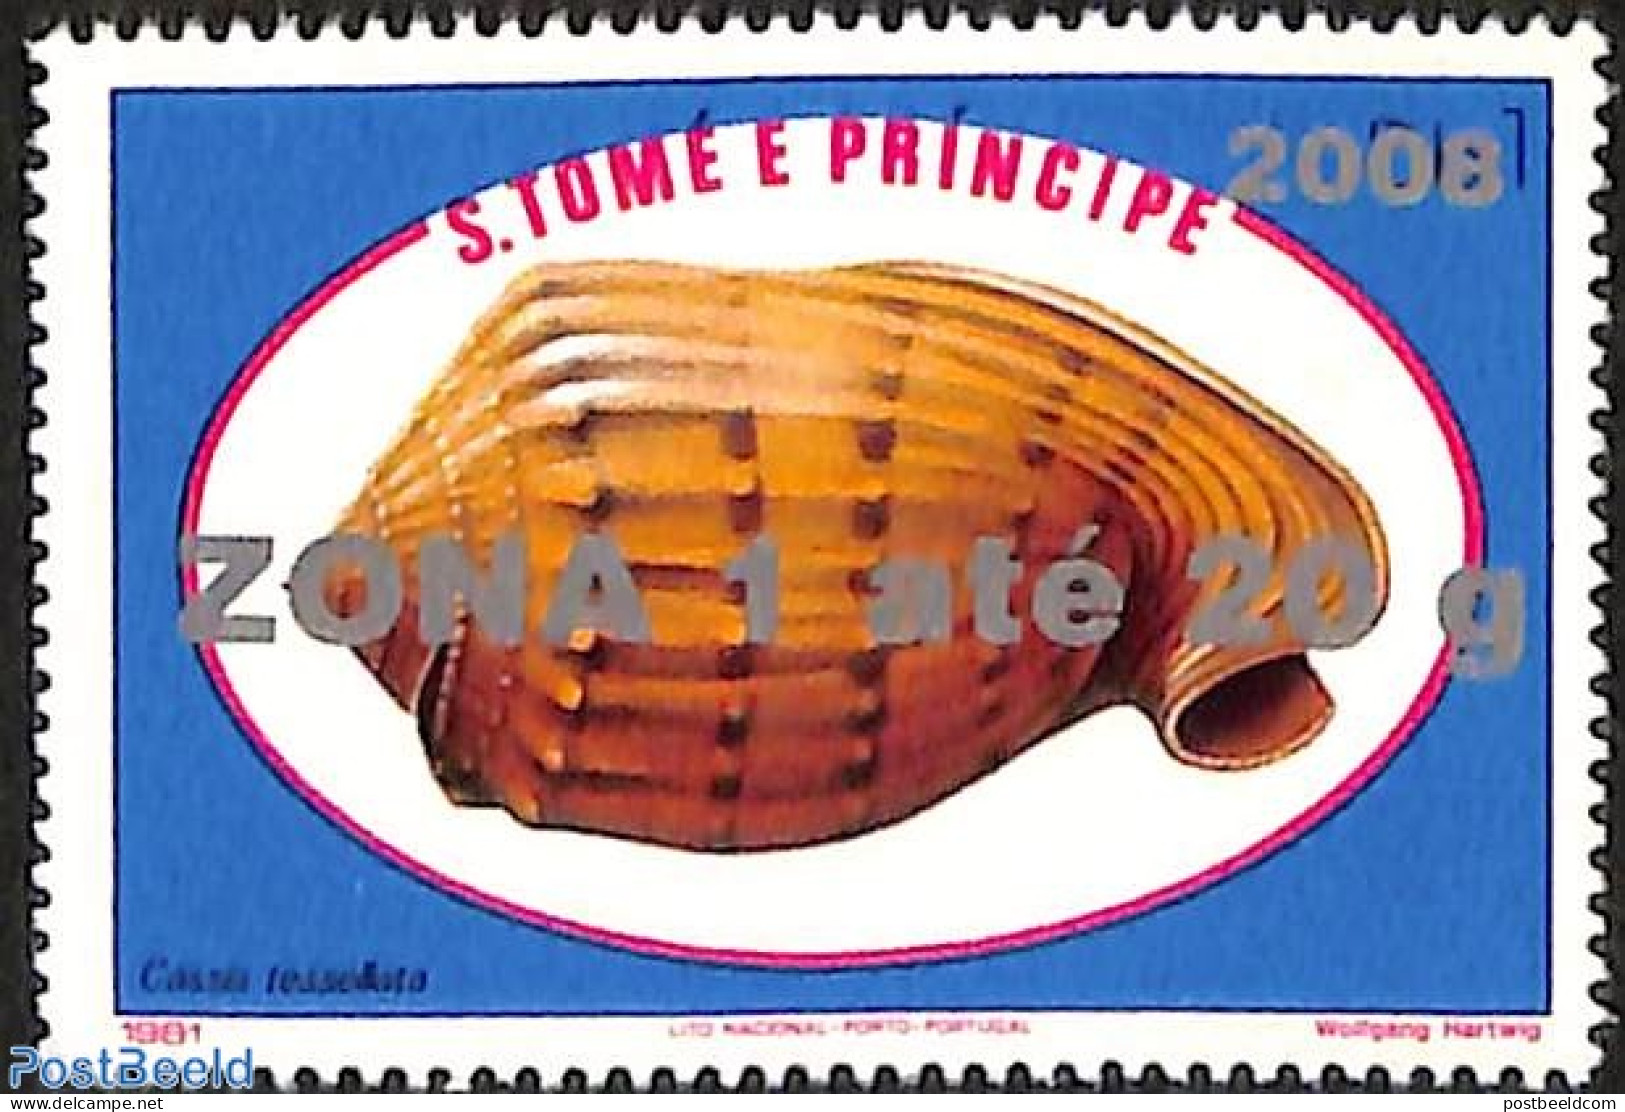 Sao Tome/Principe 2008 Cassis Tessellata Shell, Overprint, Mint NH, Nature - Shells & Crustaceans - Marine Life